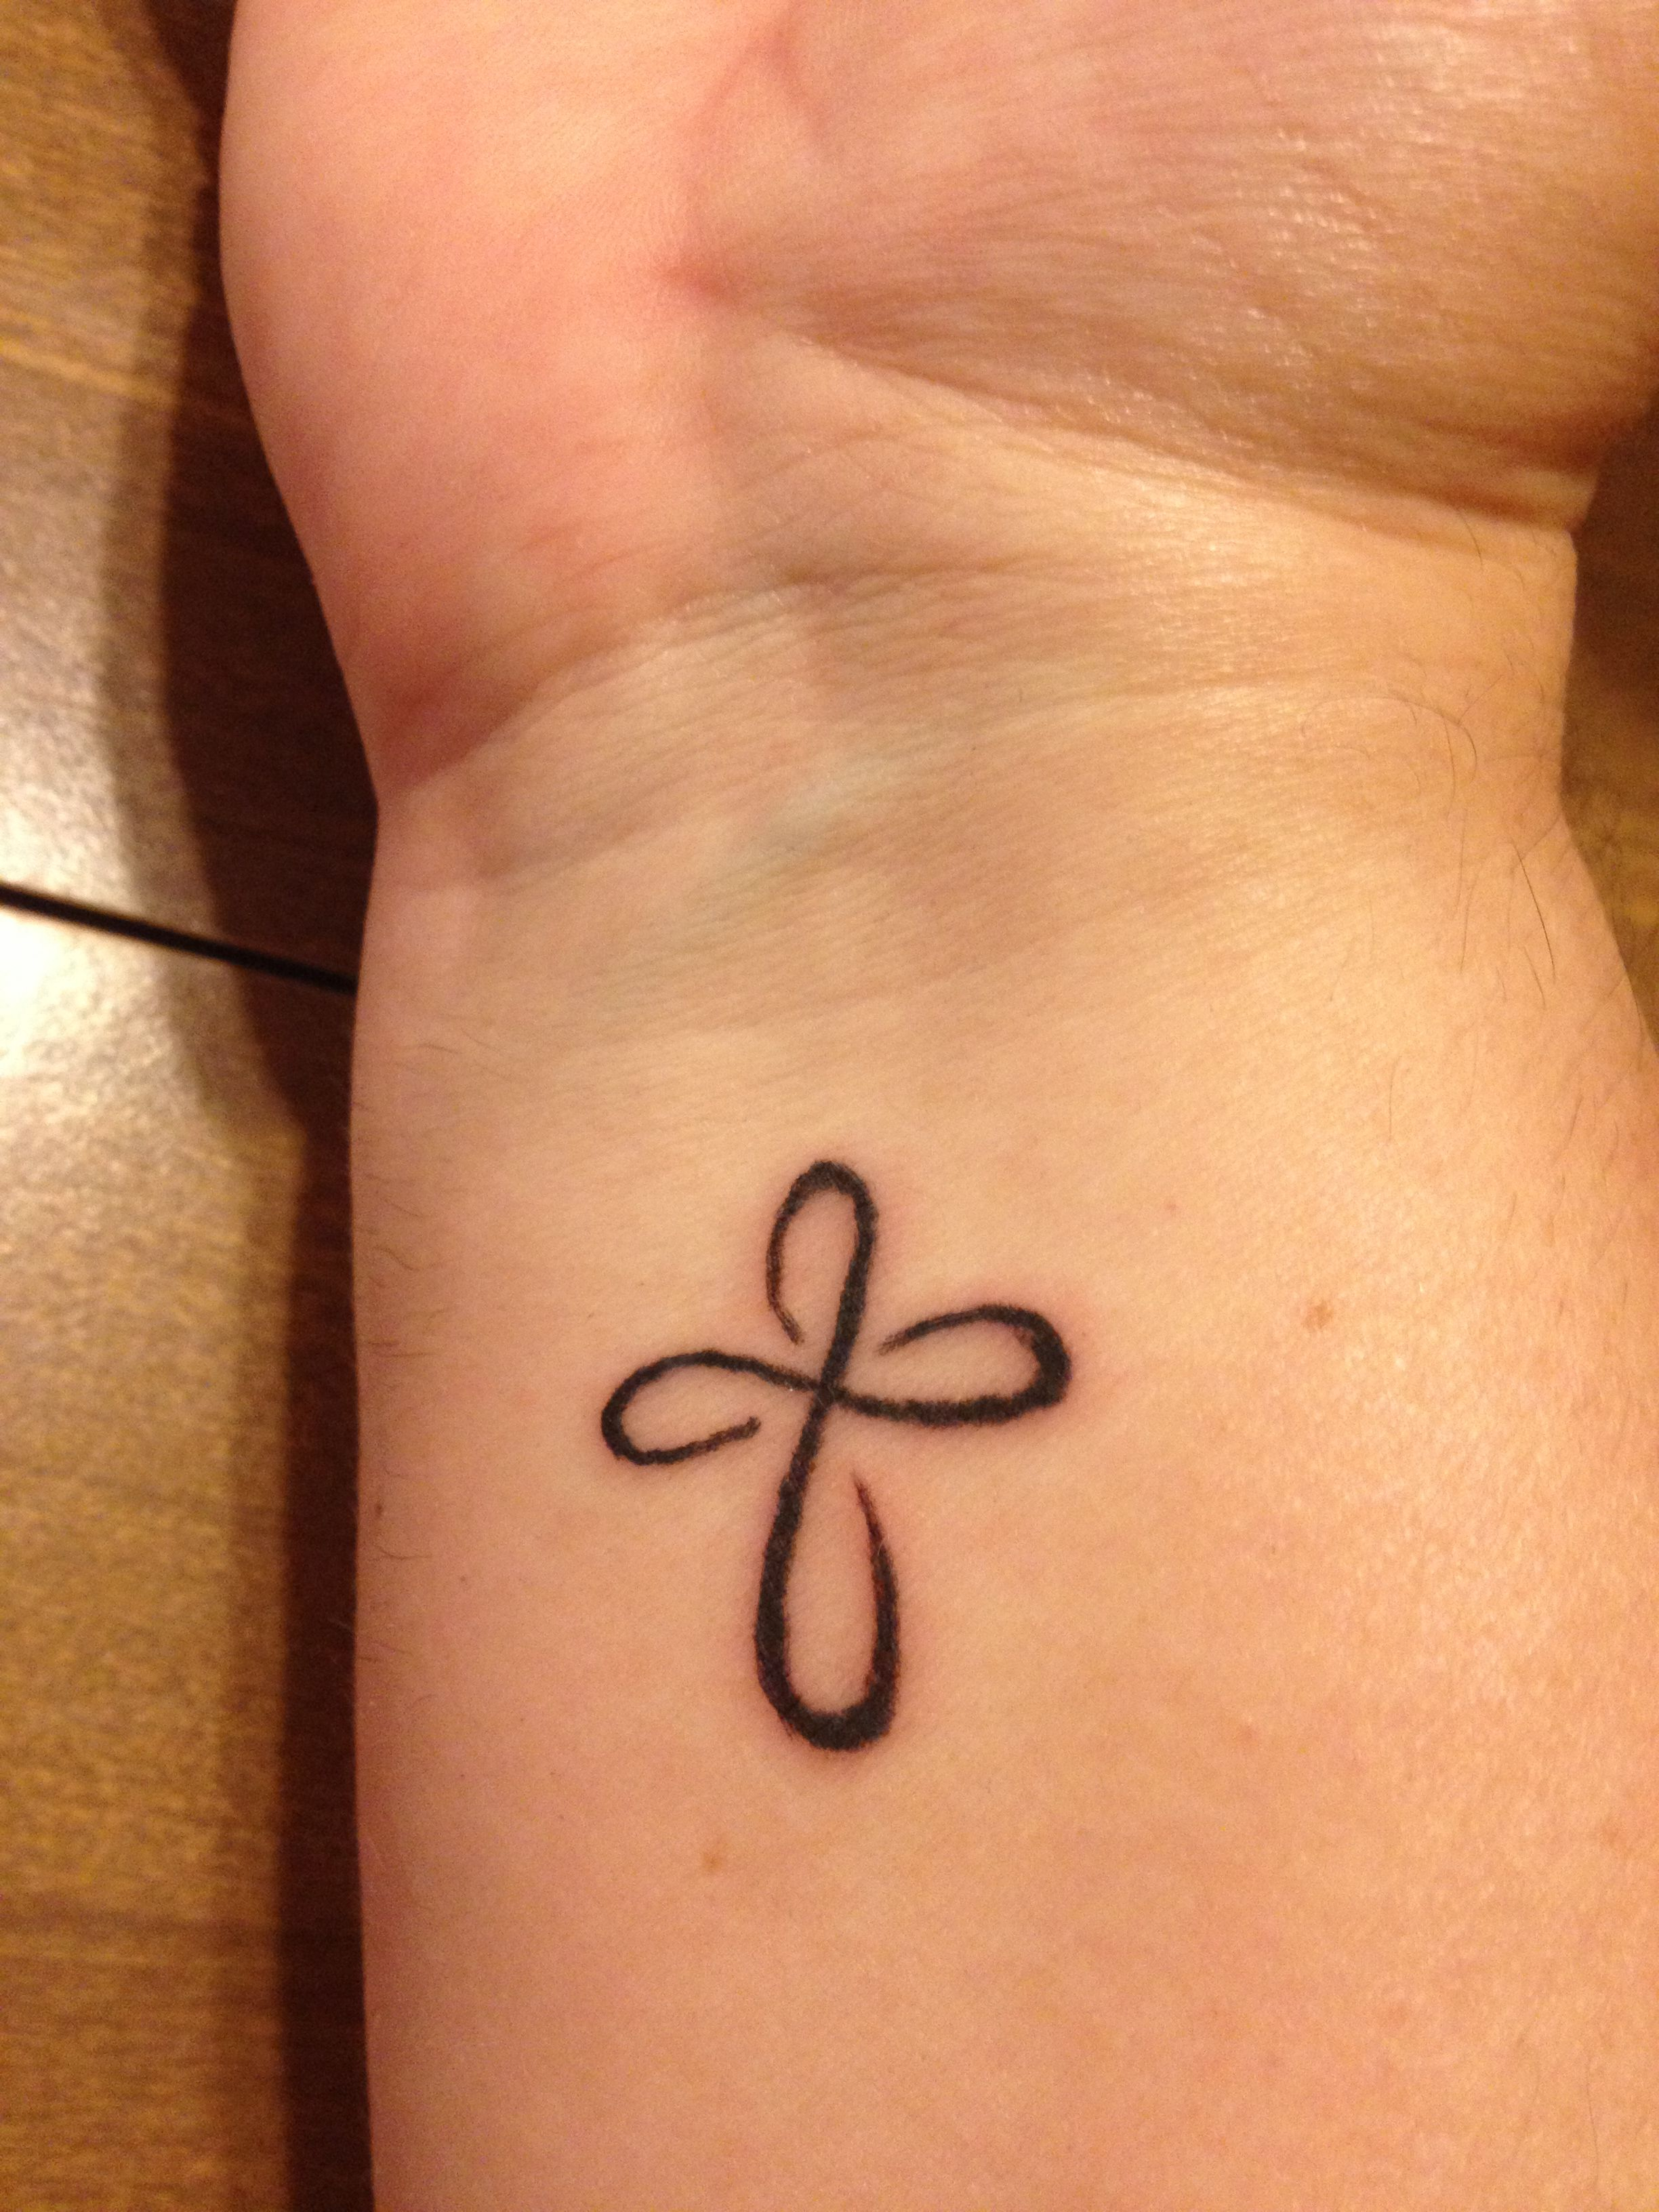 My Infinity Cross Wrist Tattoo Love This Design Tattoos inside dimensions 2448 X 3264